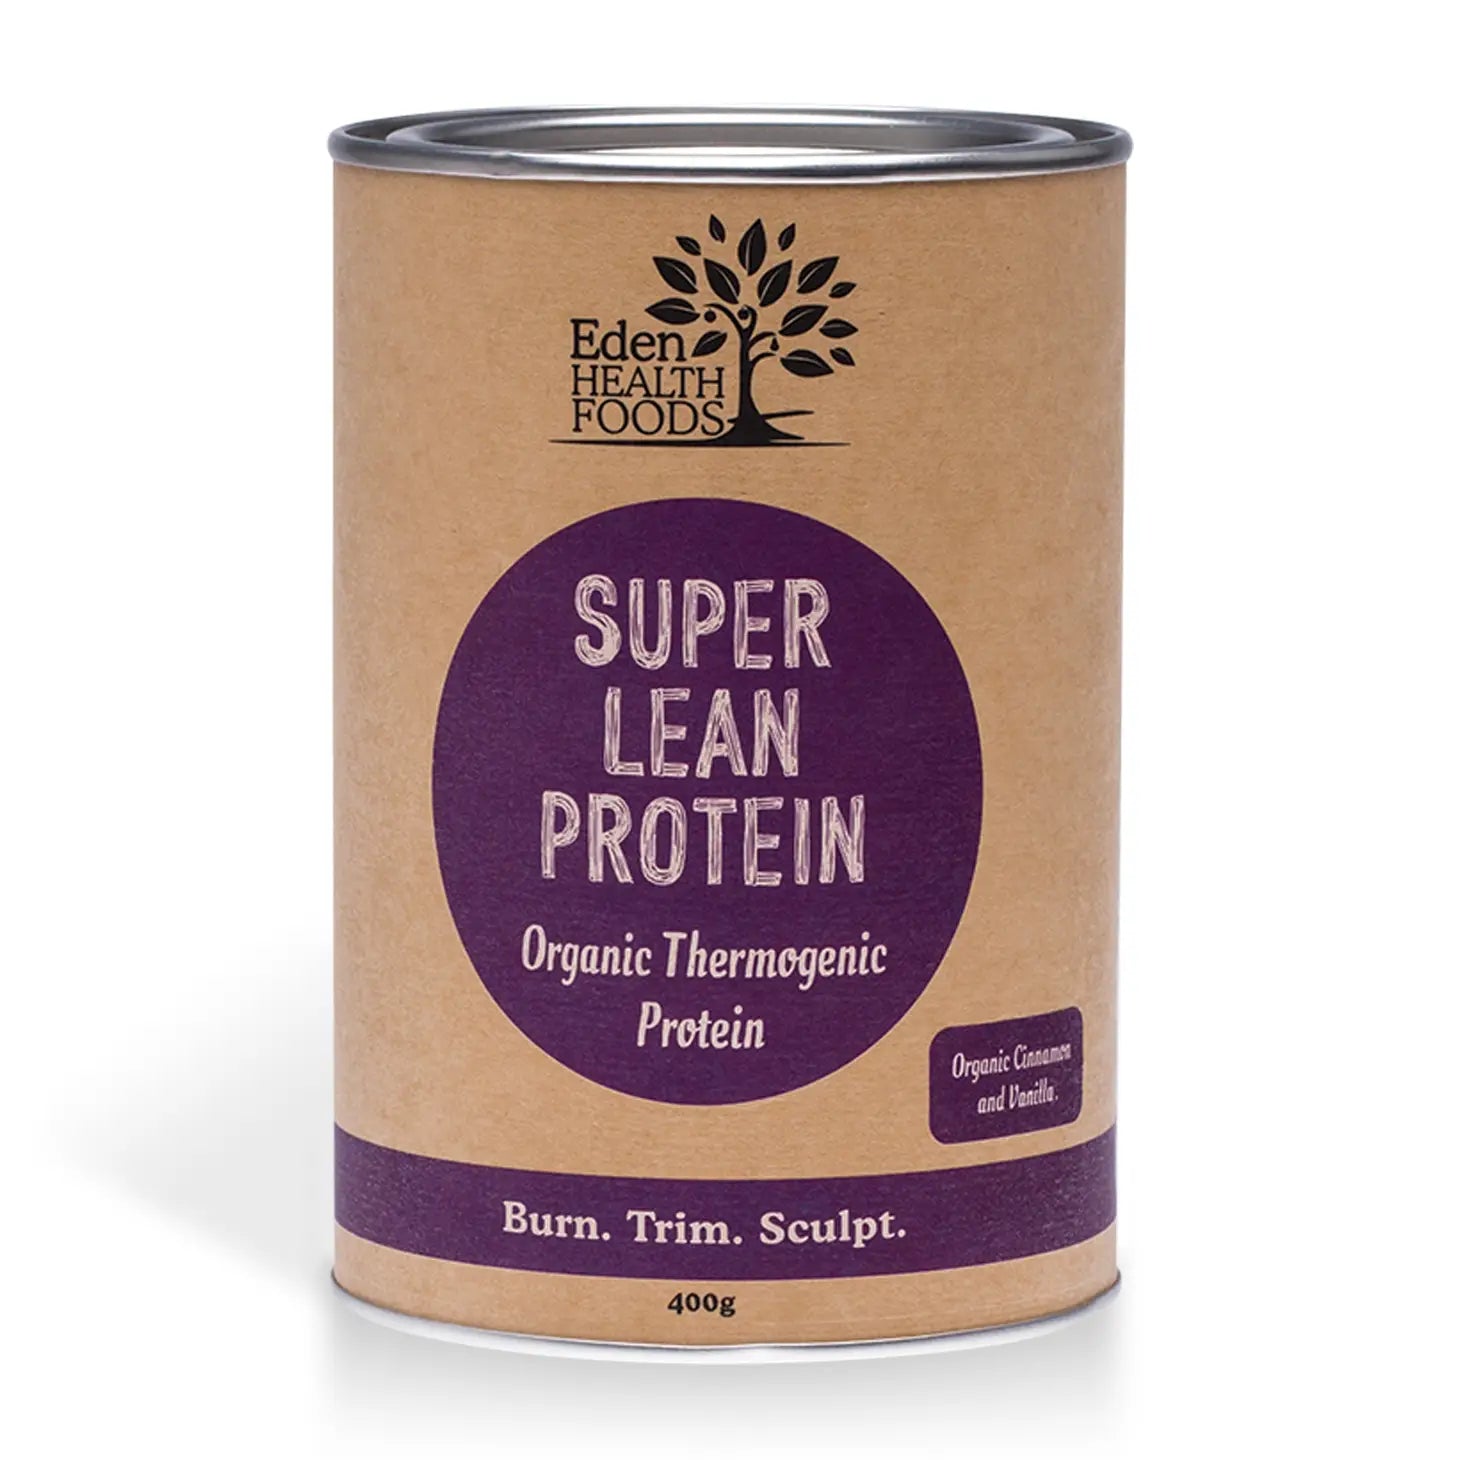 Super Lean Protein